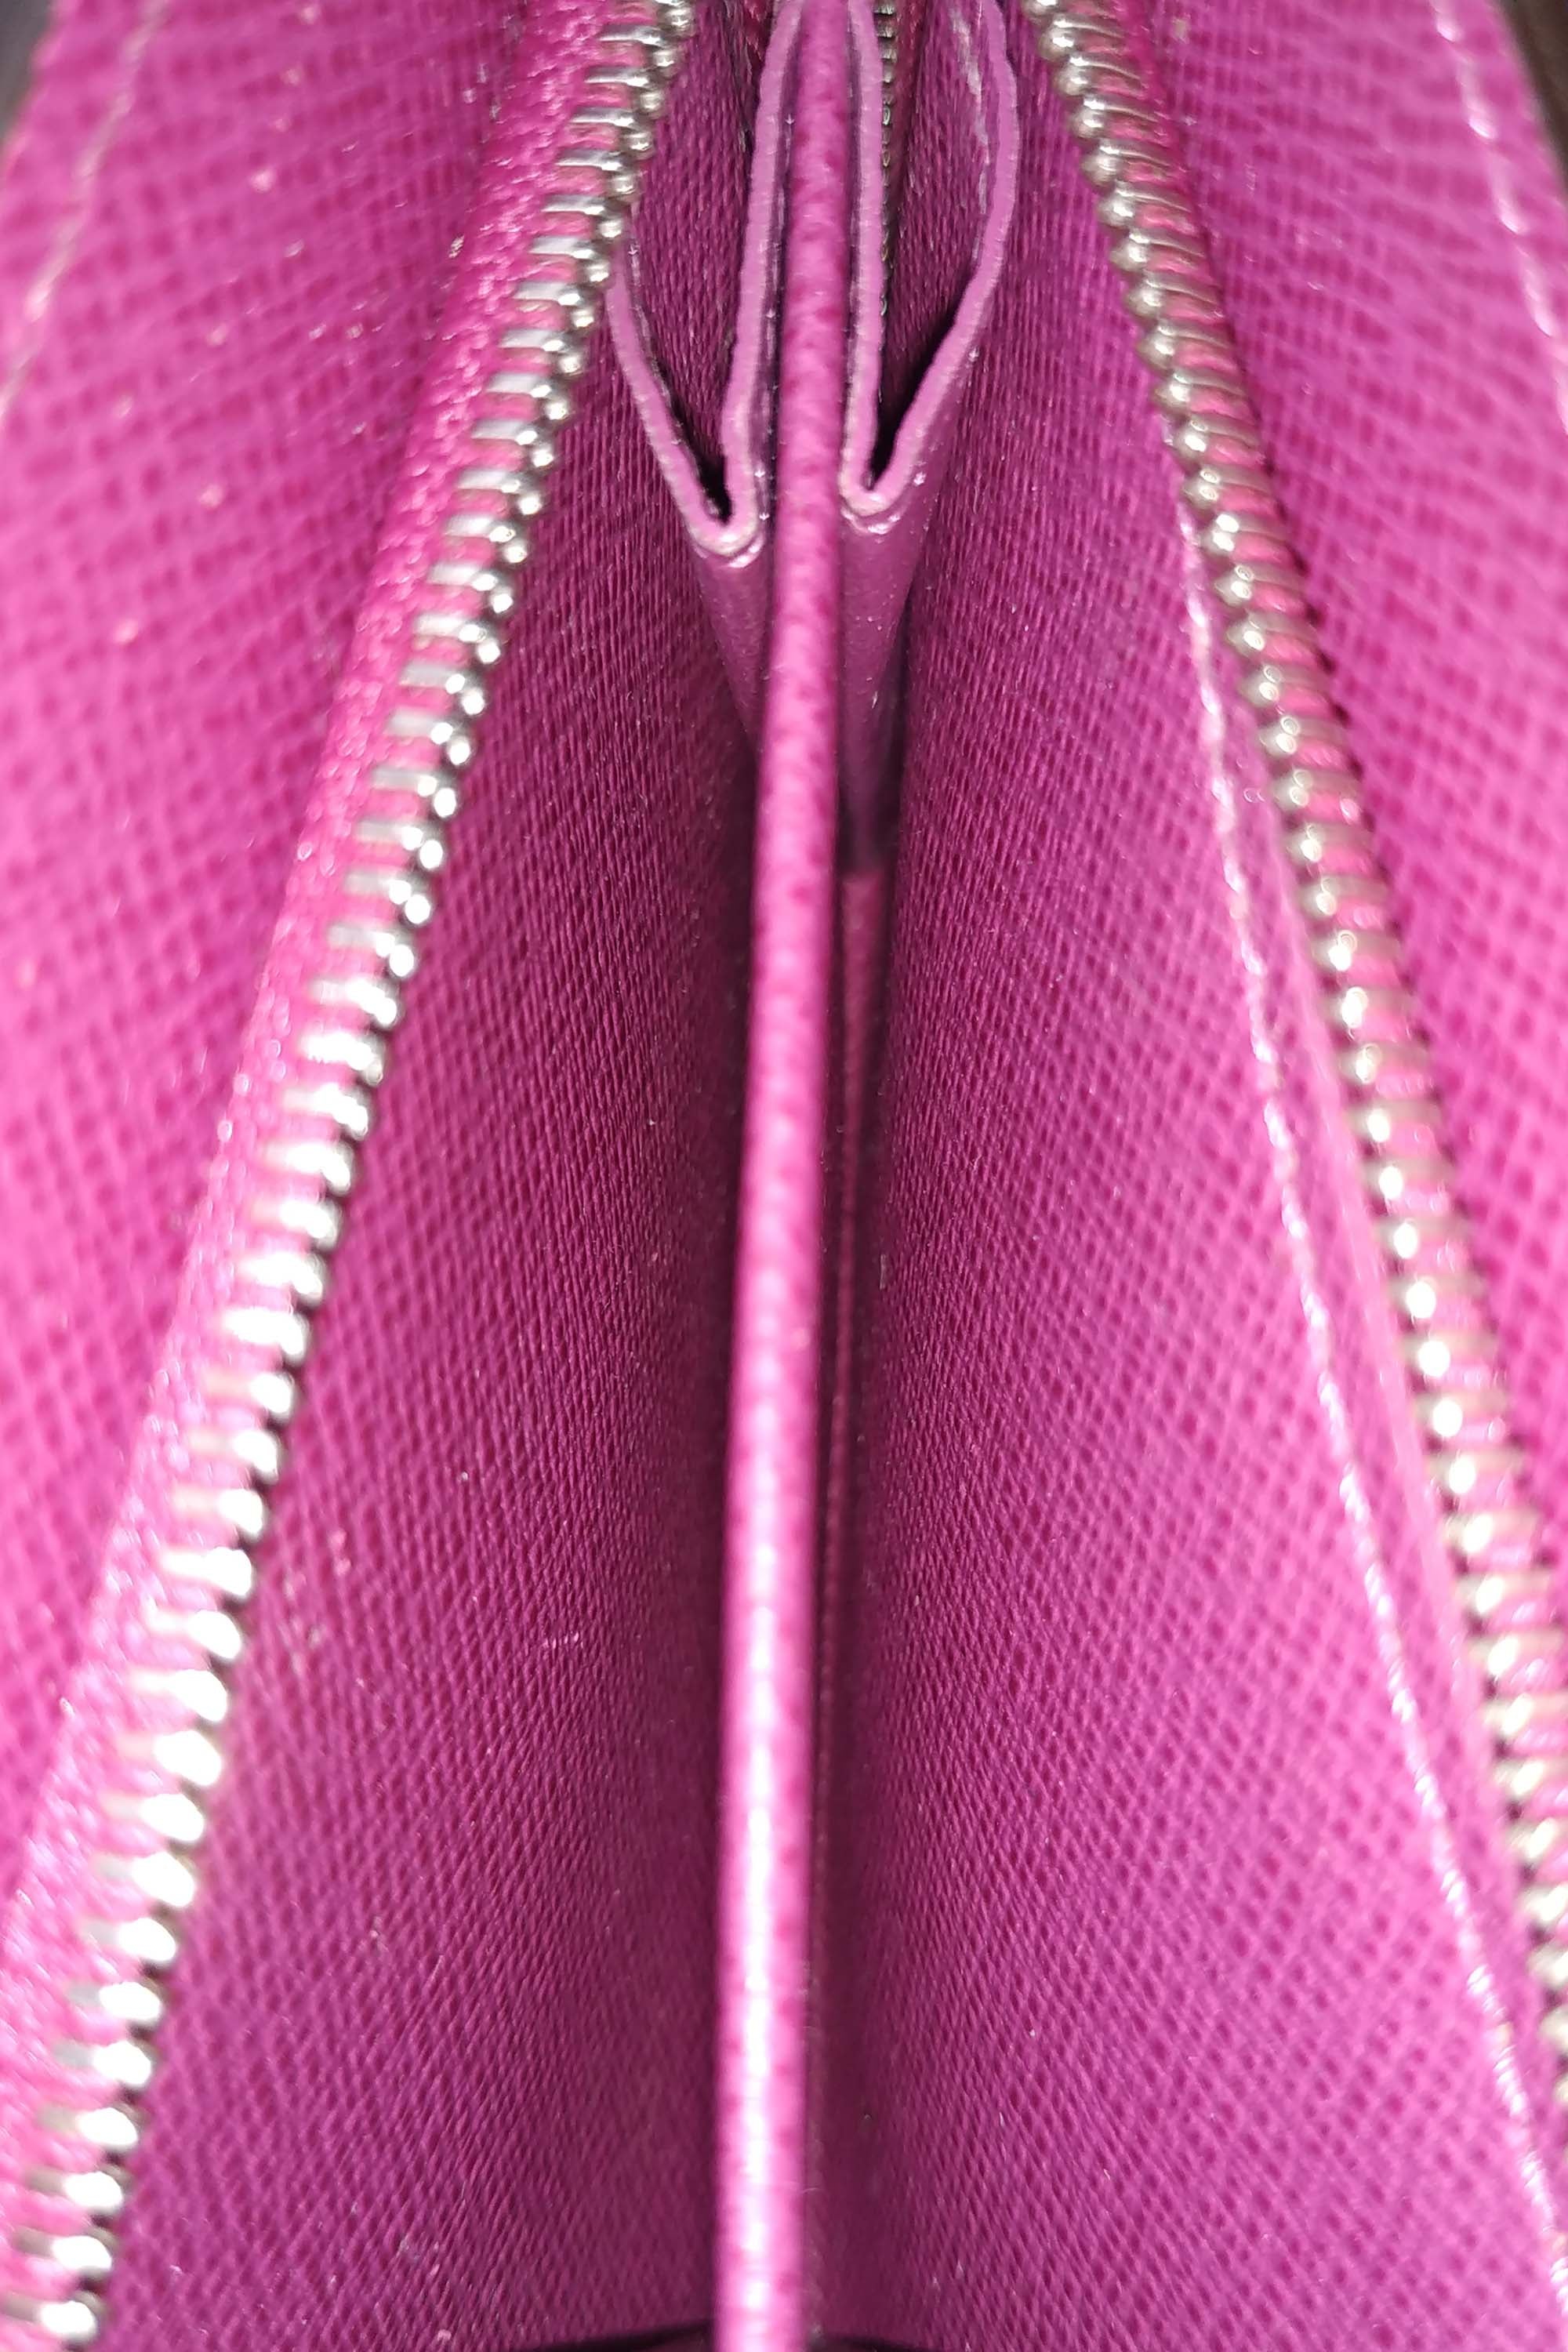 Buy Authentic, Preloved Louis Vuitton Epi Joey Wallet Purple Bags